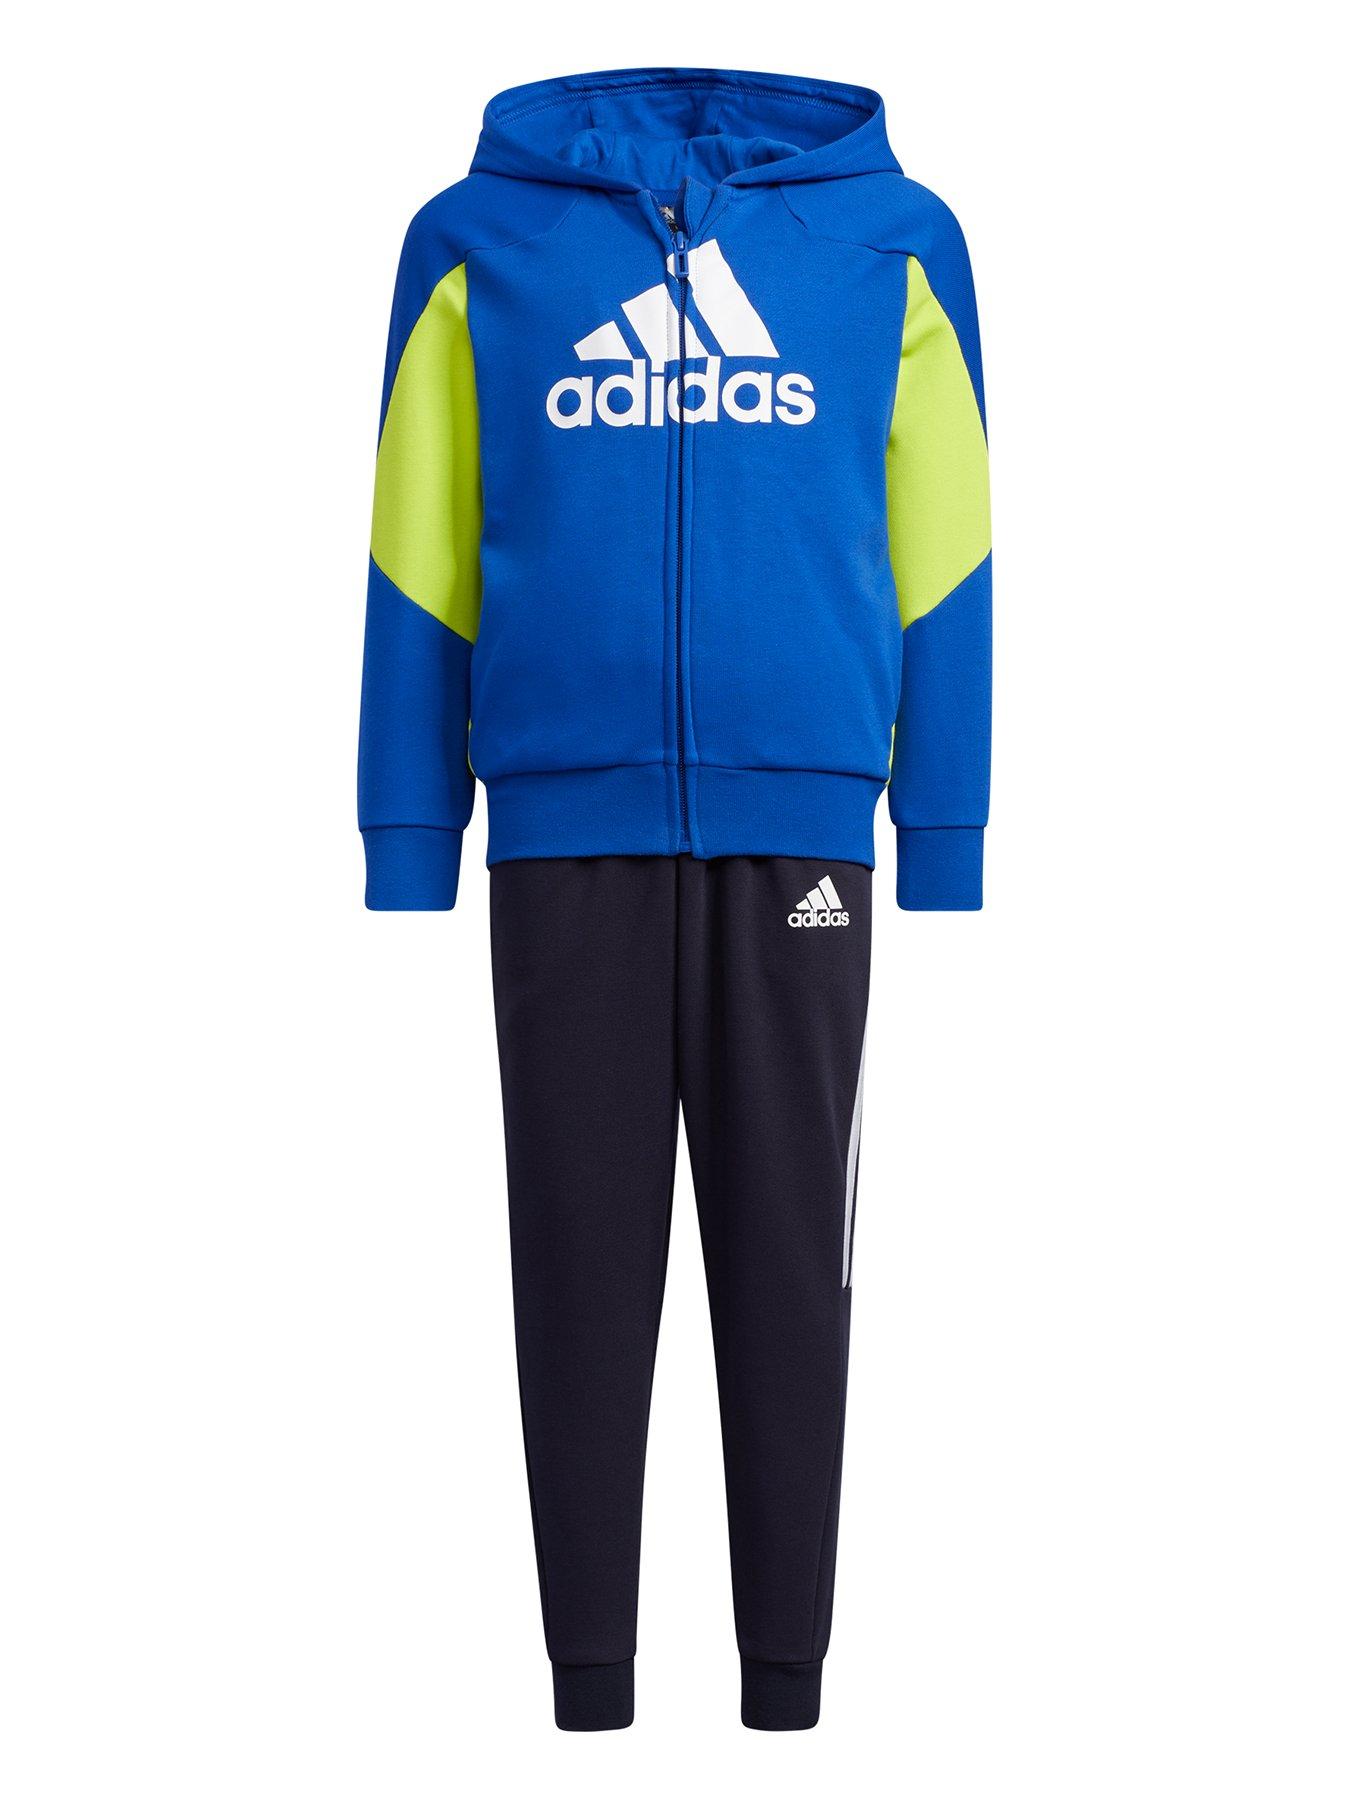 Kids Polyester Tracksuit Front Contrast Set Full Sleeve Zipper Hoodie Fleece Bottoms Top Jogging Jogger Gym School Clothing 